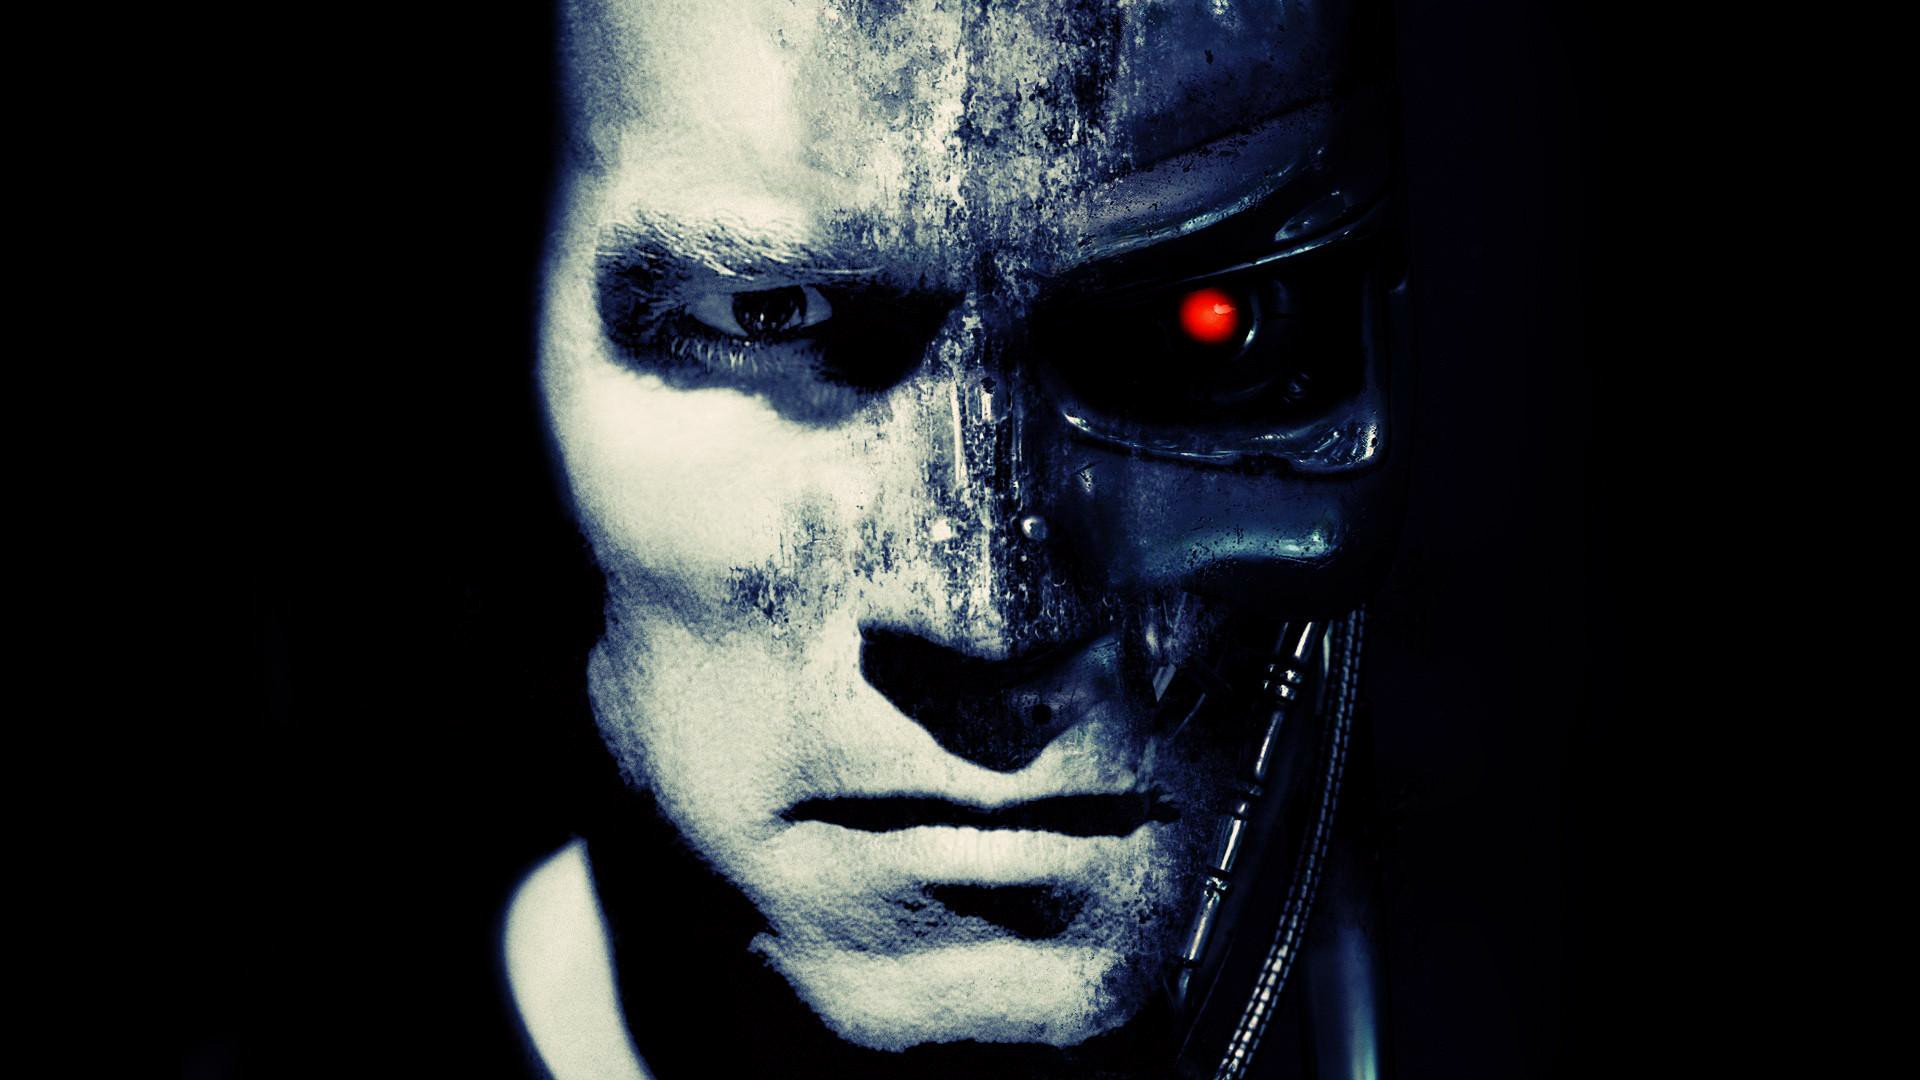 People 1920x1080 endoskeleton futuristic Arnold Schwarzenegger black background closeup science fiction cyborg movies face men red eyes simple background